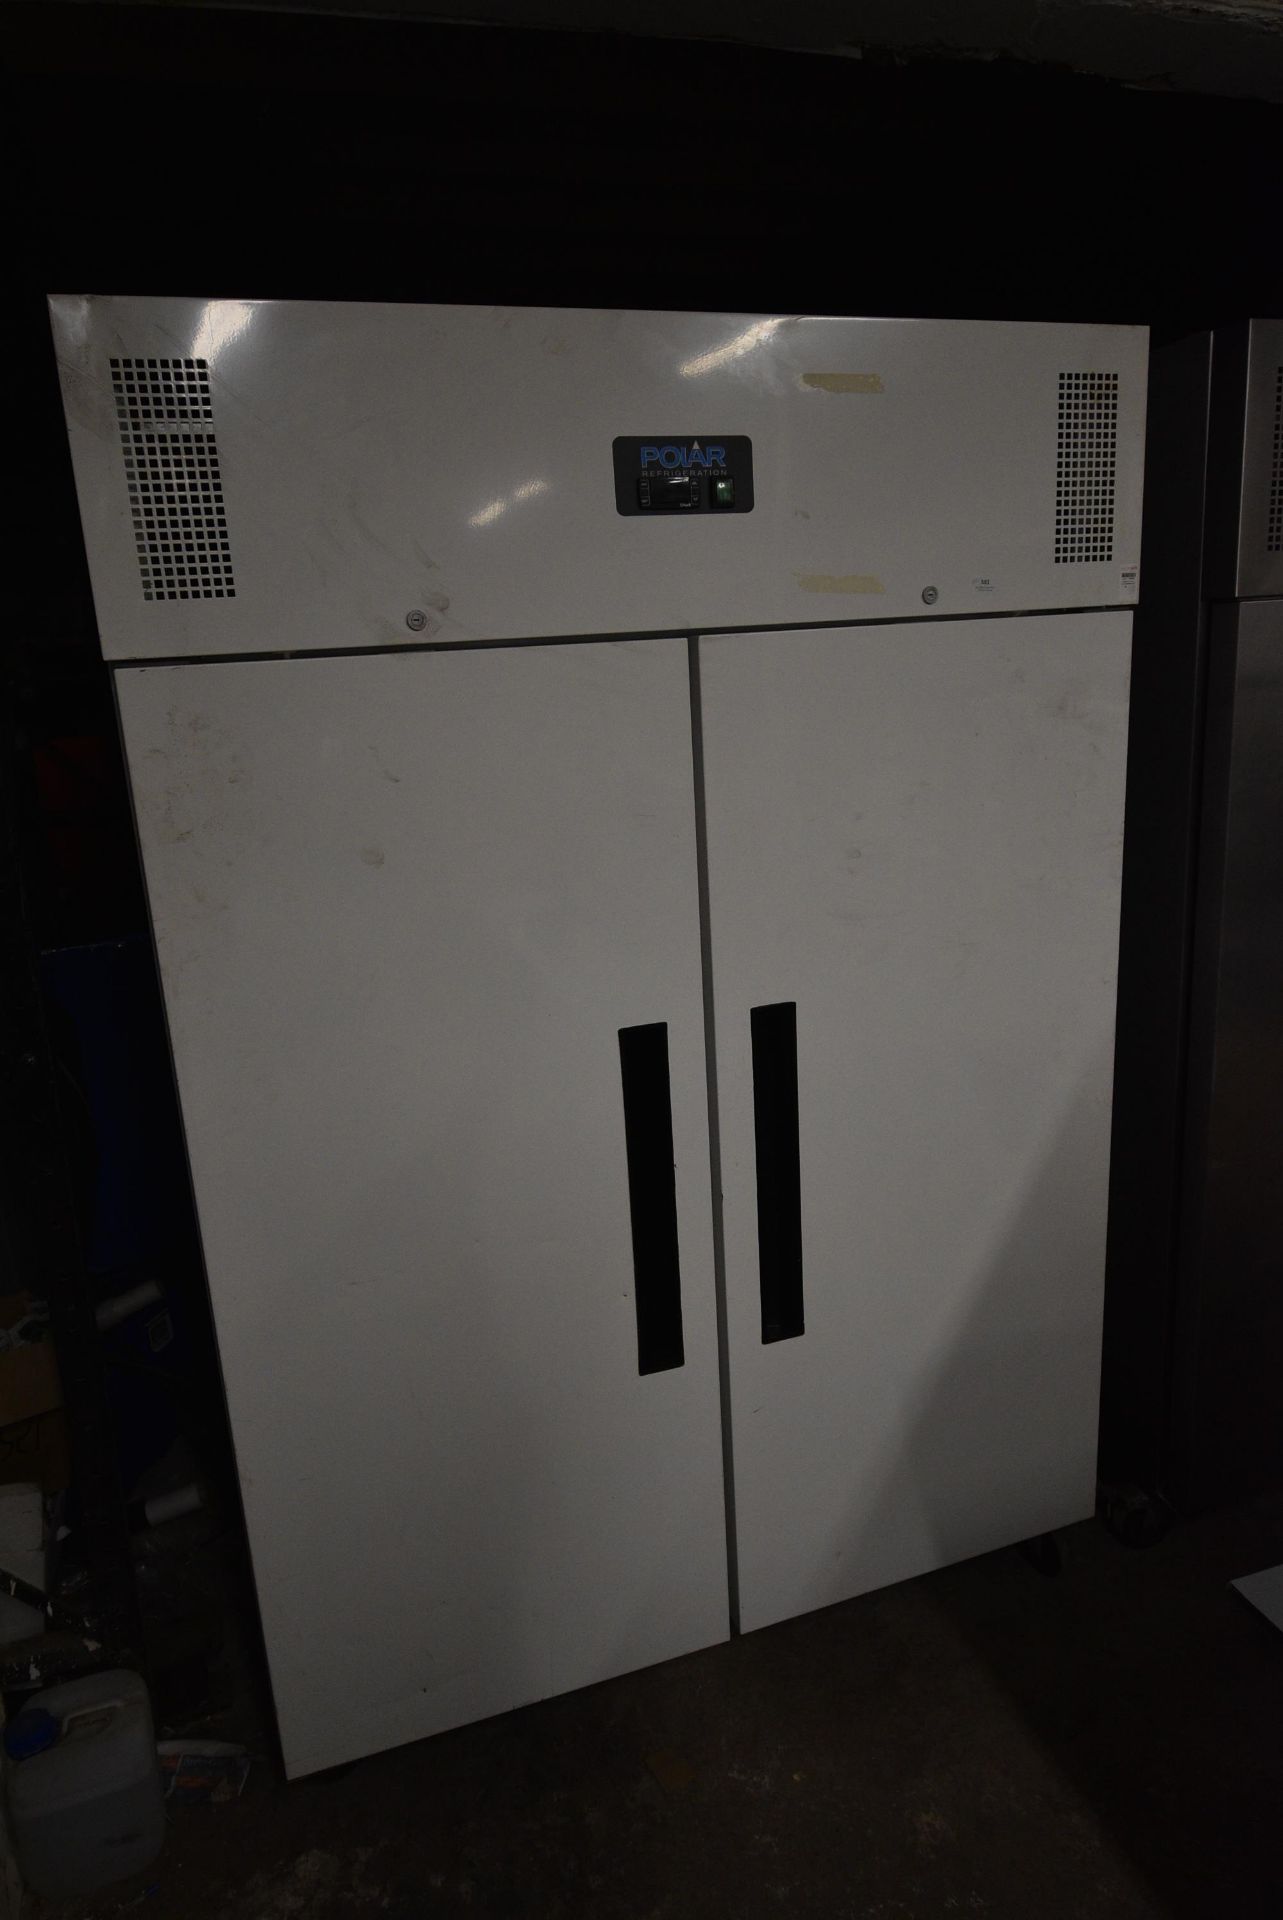 Polar CC663-02 Upright Double Door Refrigerator